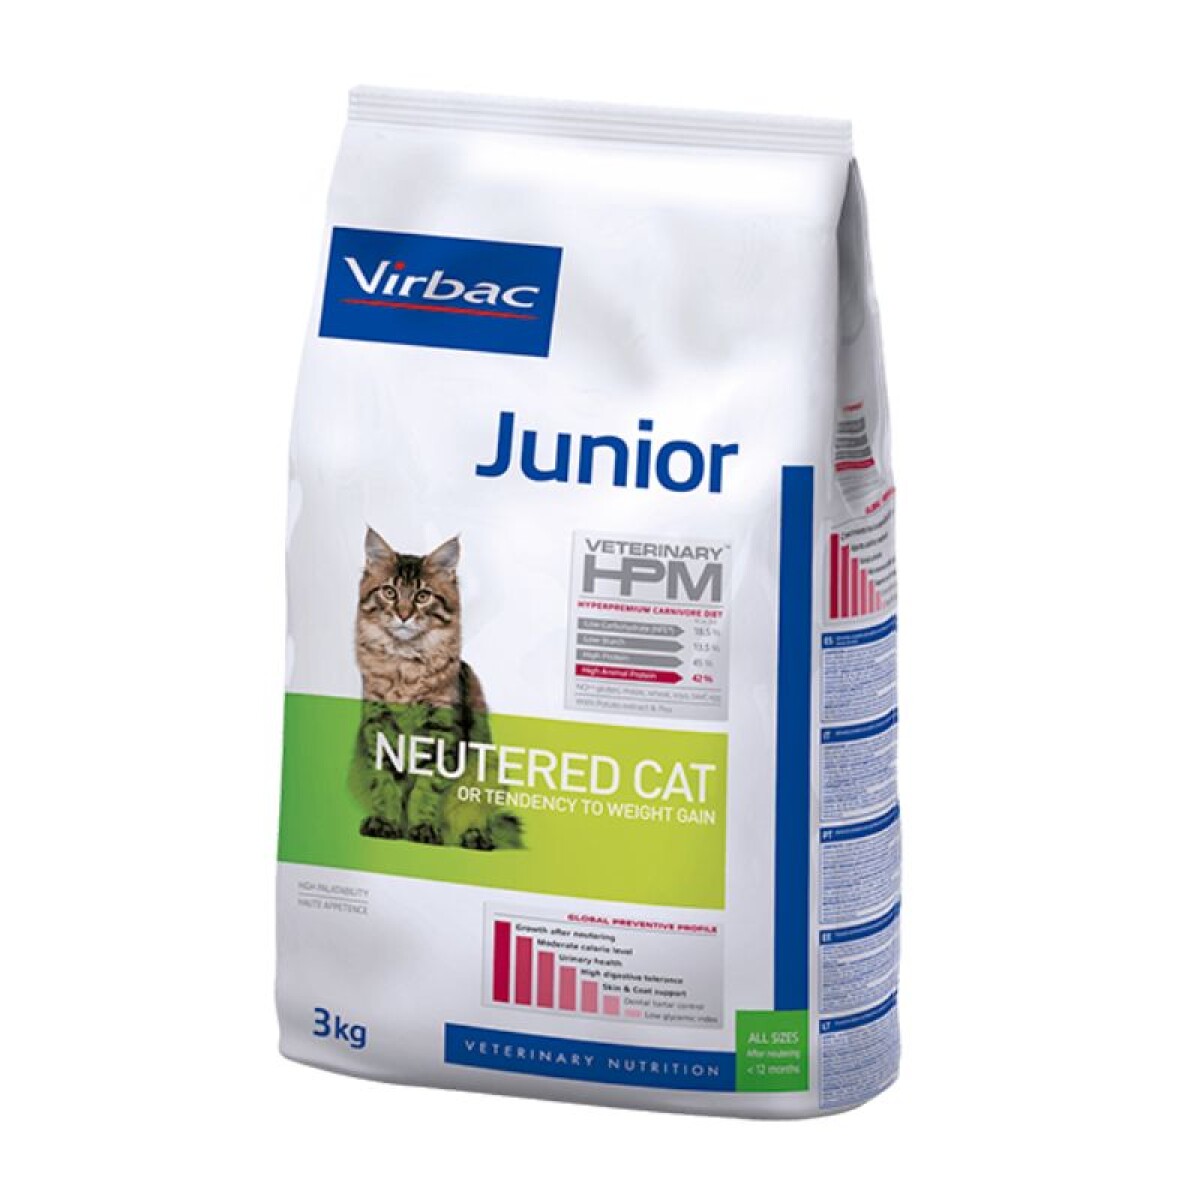 HPM JUNIOR NEUTERED CAT 3 KG - Hpm Junior Neutered Cat 3 Kg 